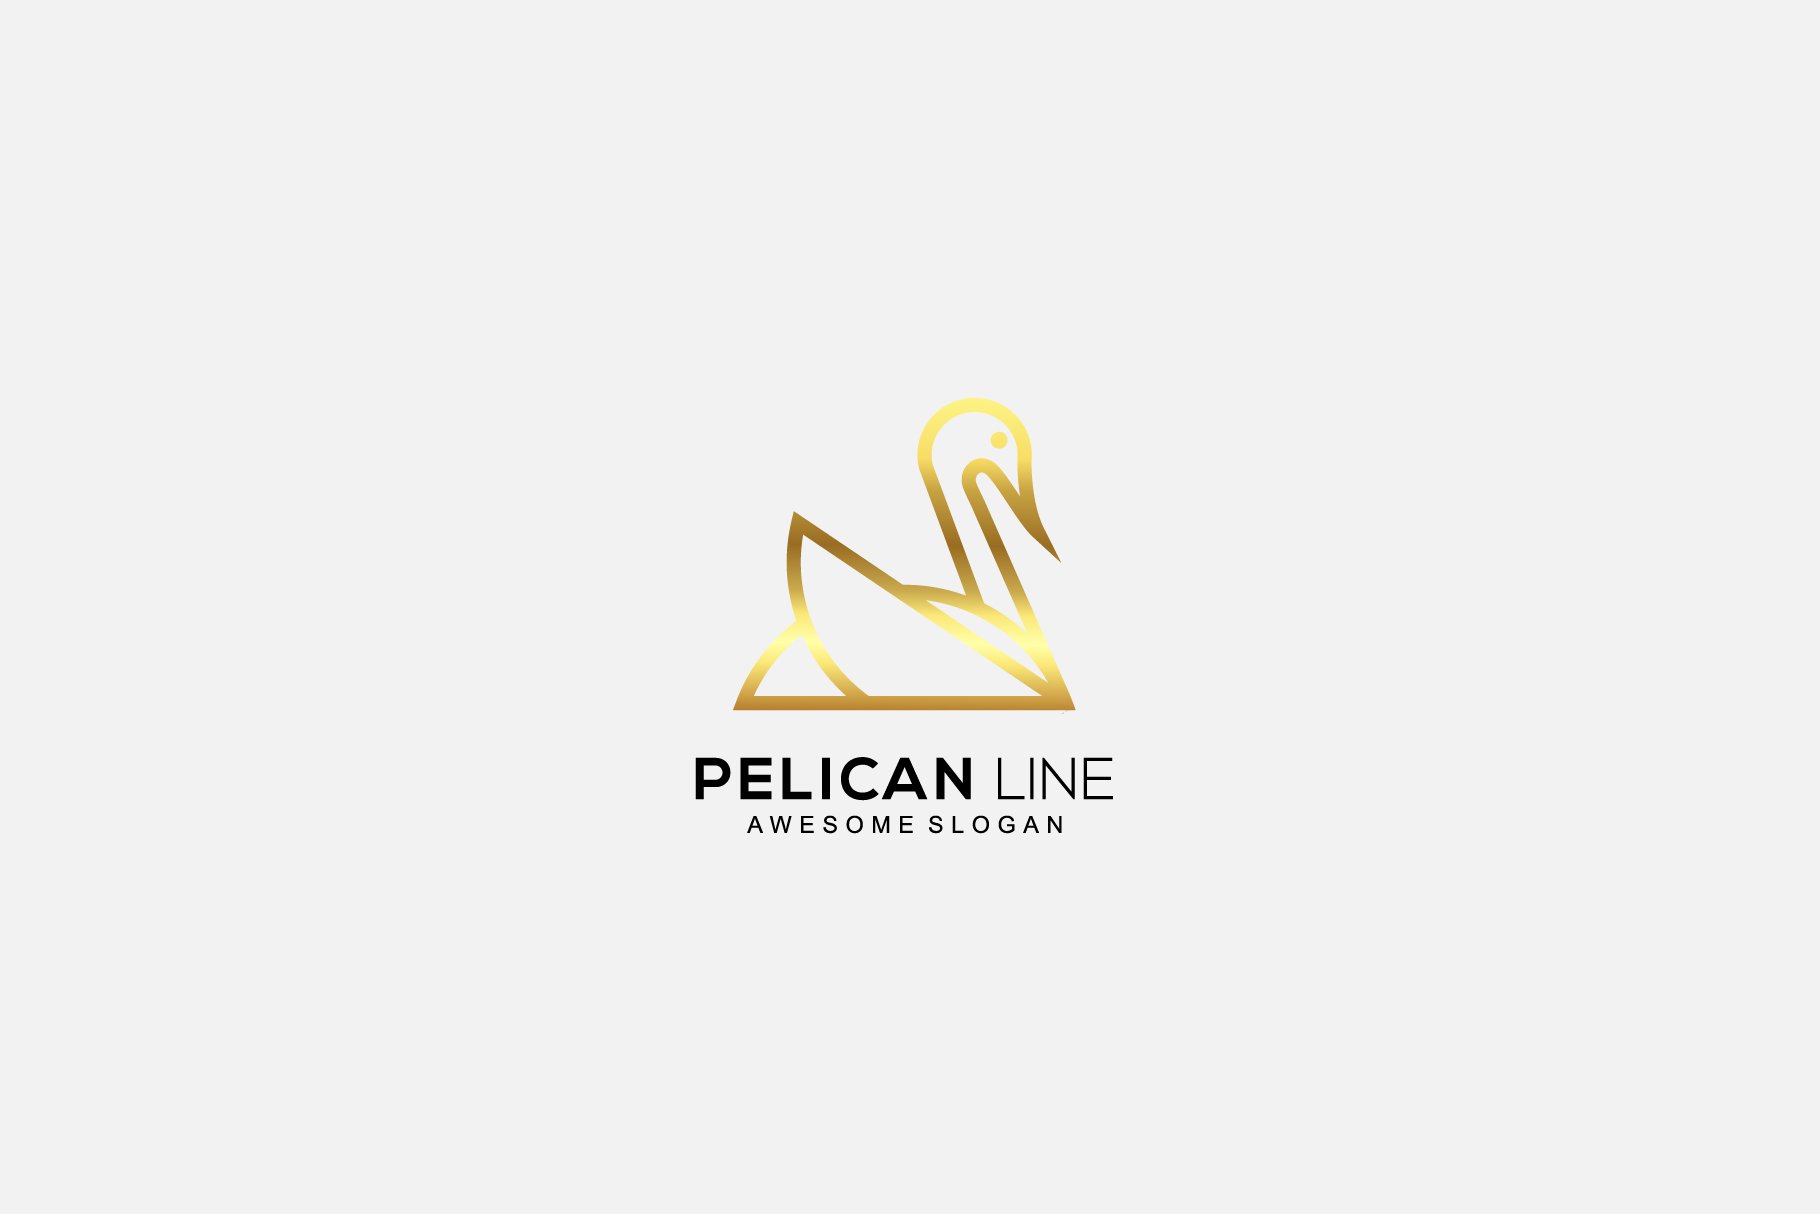 pelican line art logo template desig cover image.